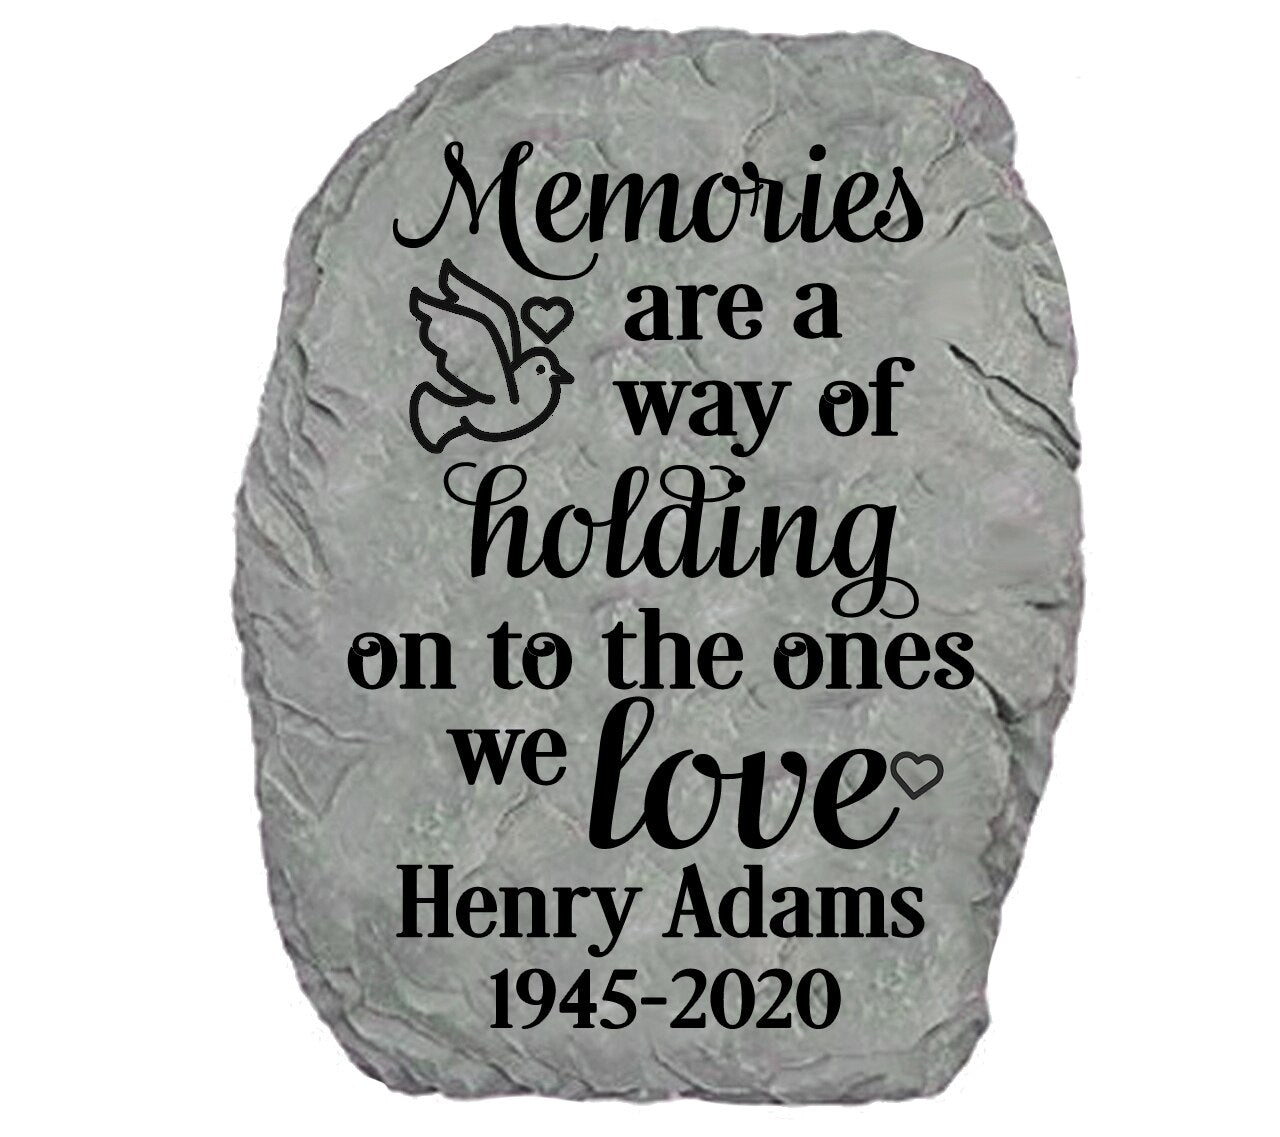 Personalized Holding Memories Memorial Garden Stone.